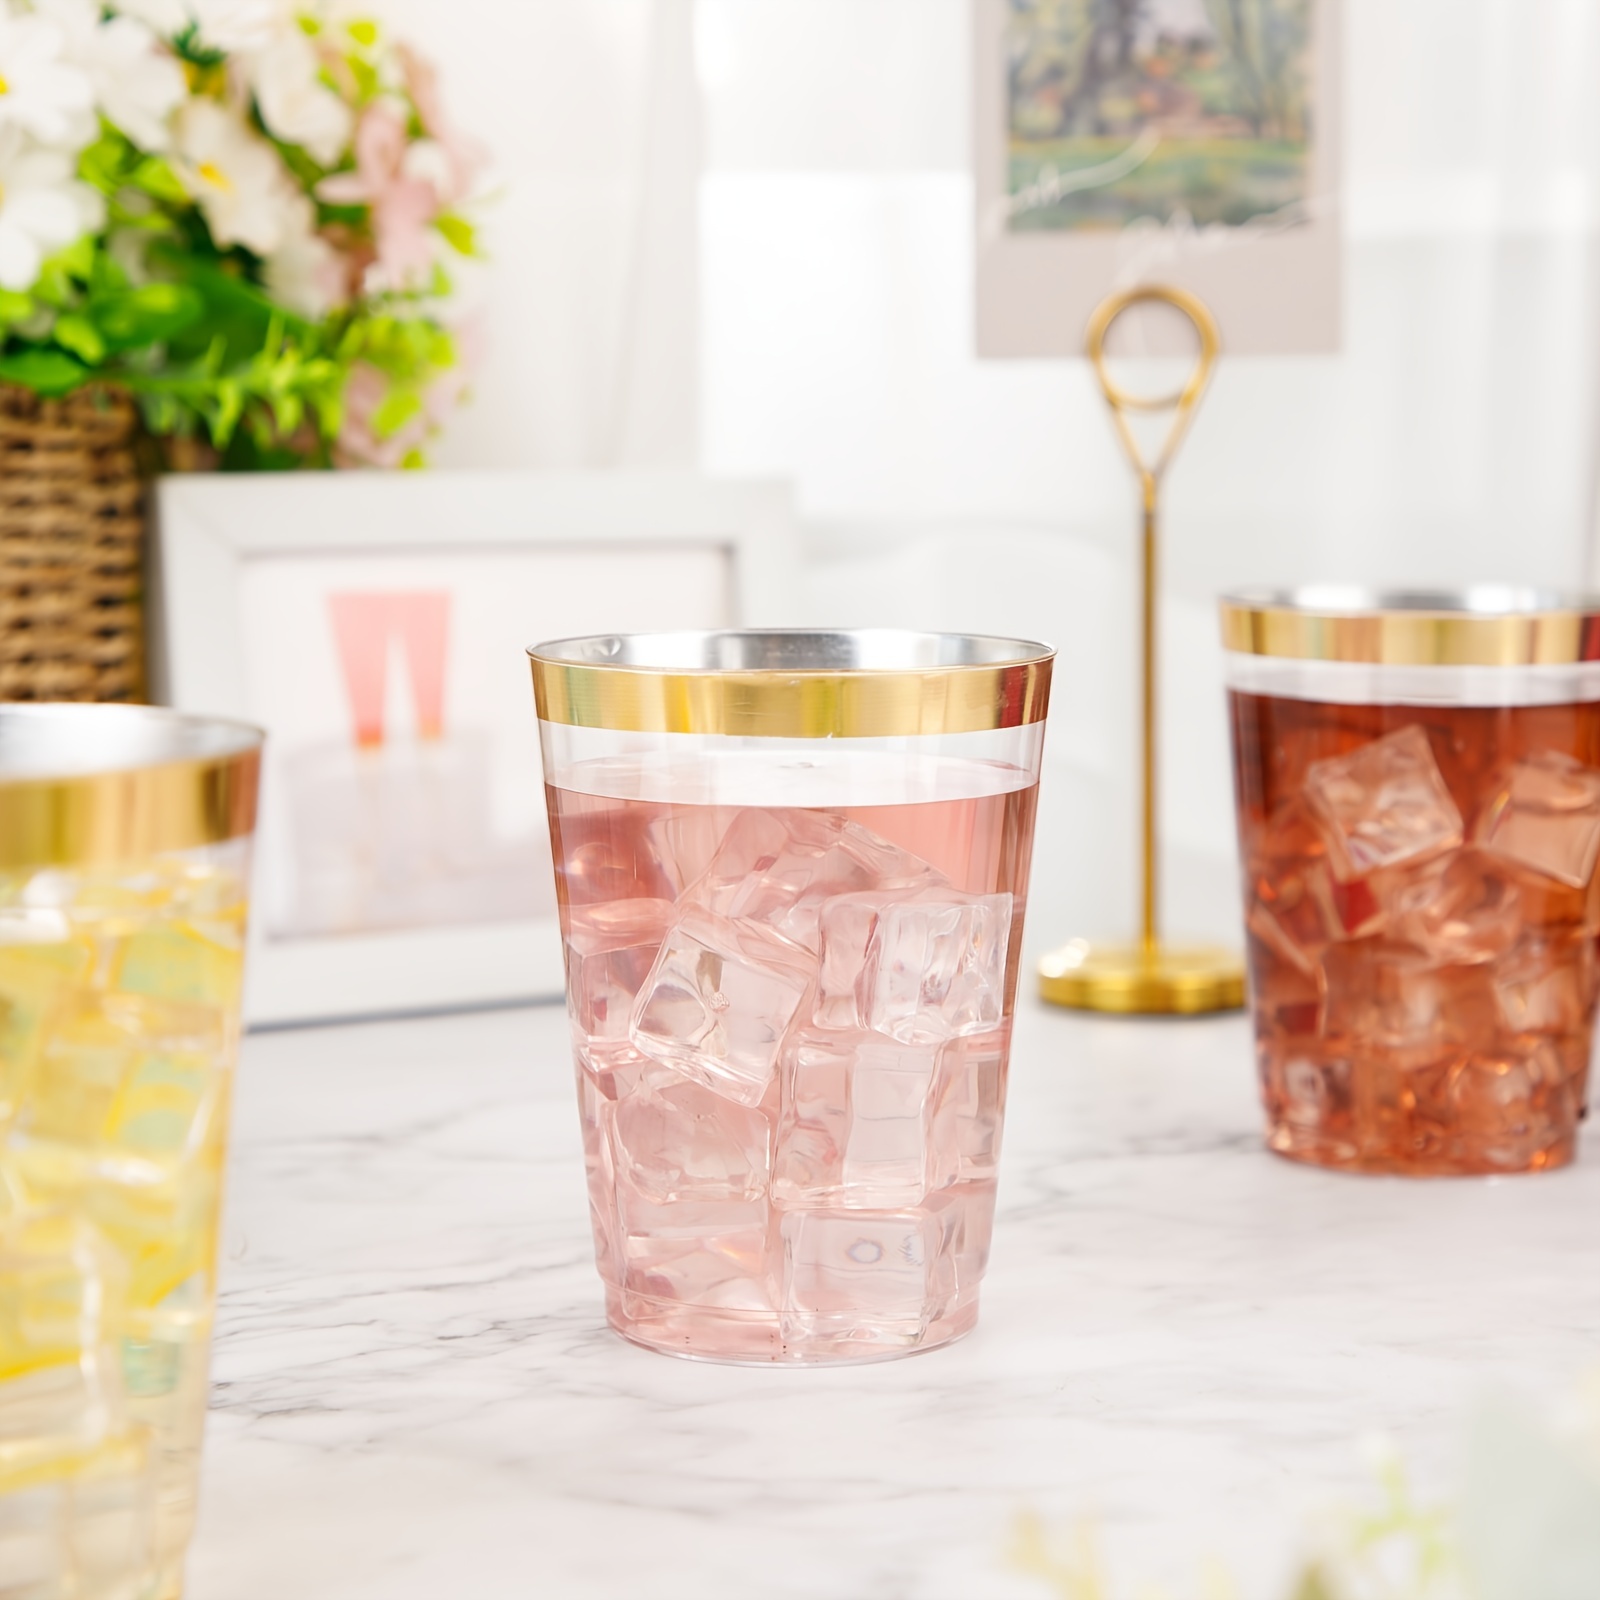  Copas de agua de cristal de 16 onzas, elegantes vasos